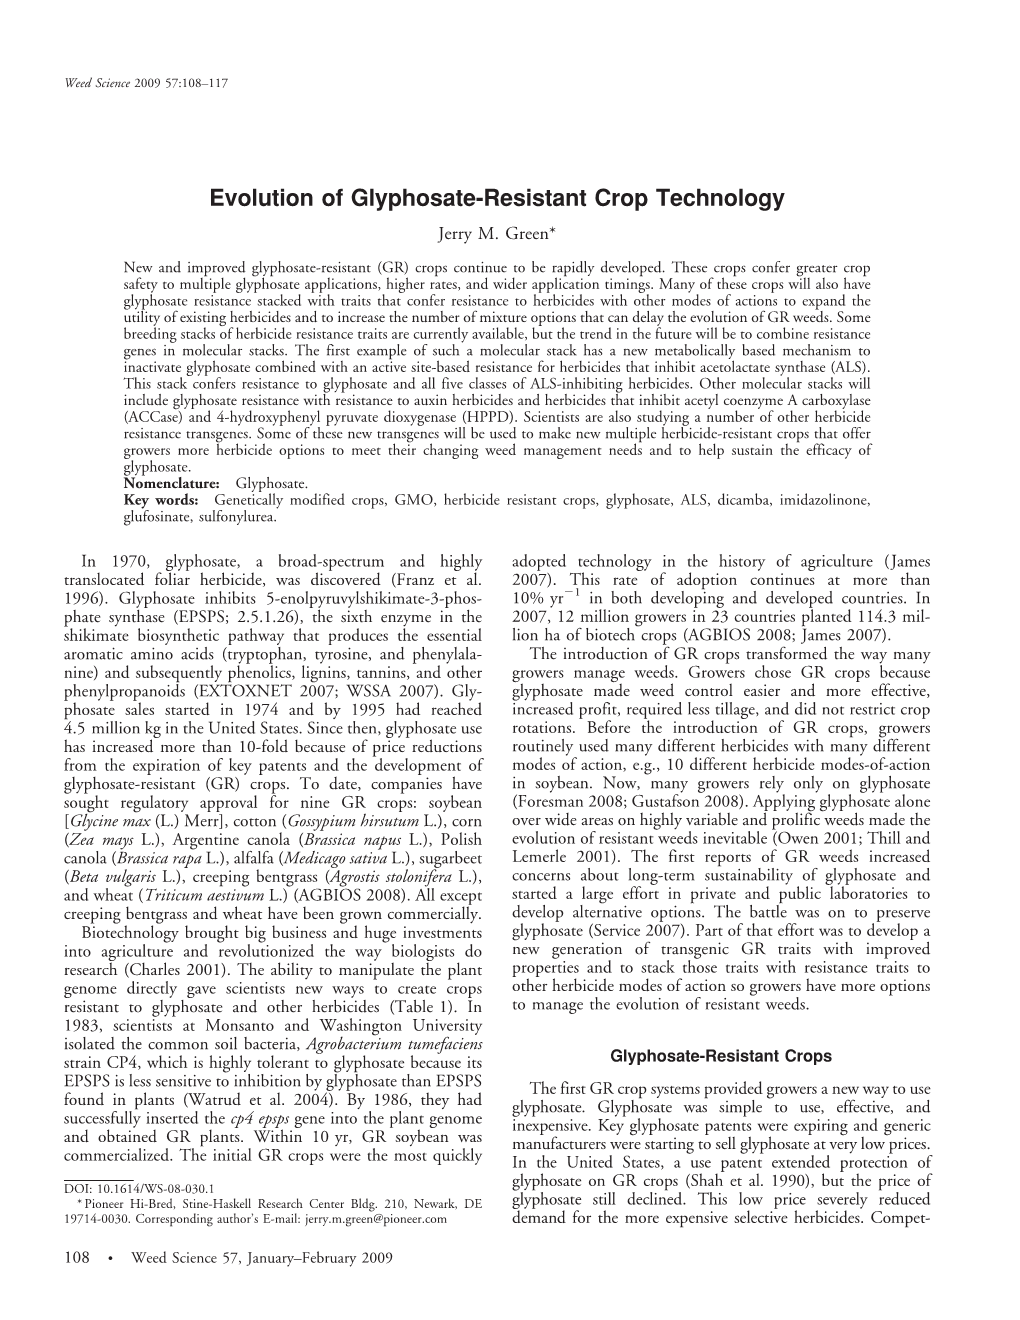 Evolution of Glyphosate-Resistant Crop Technology Jerry M